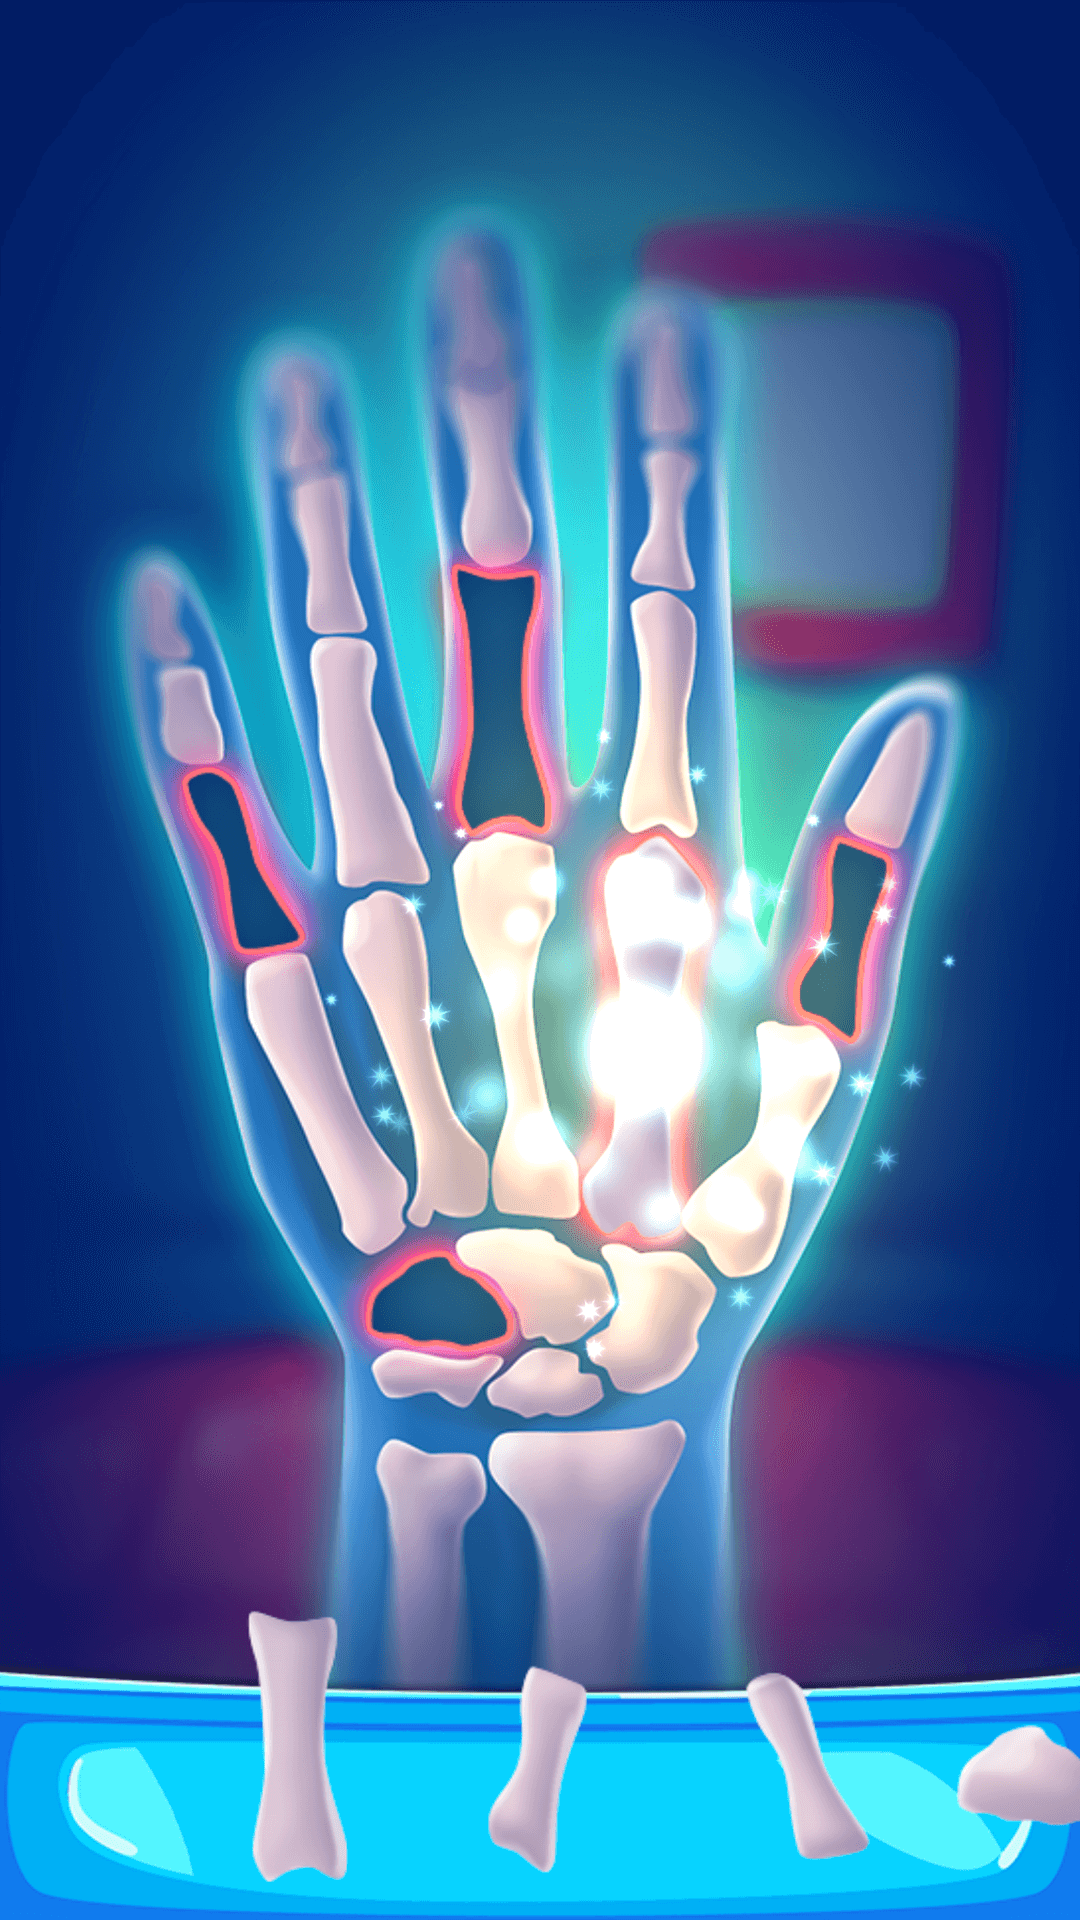 Hand Doctor Hospital Games